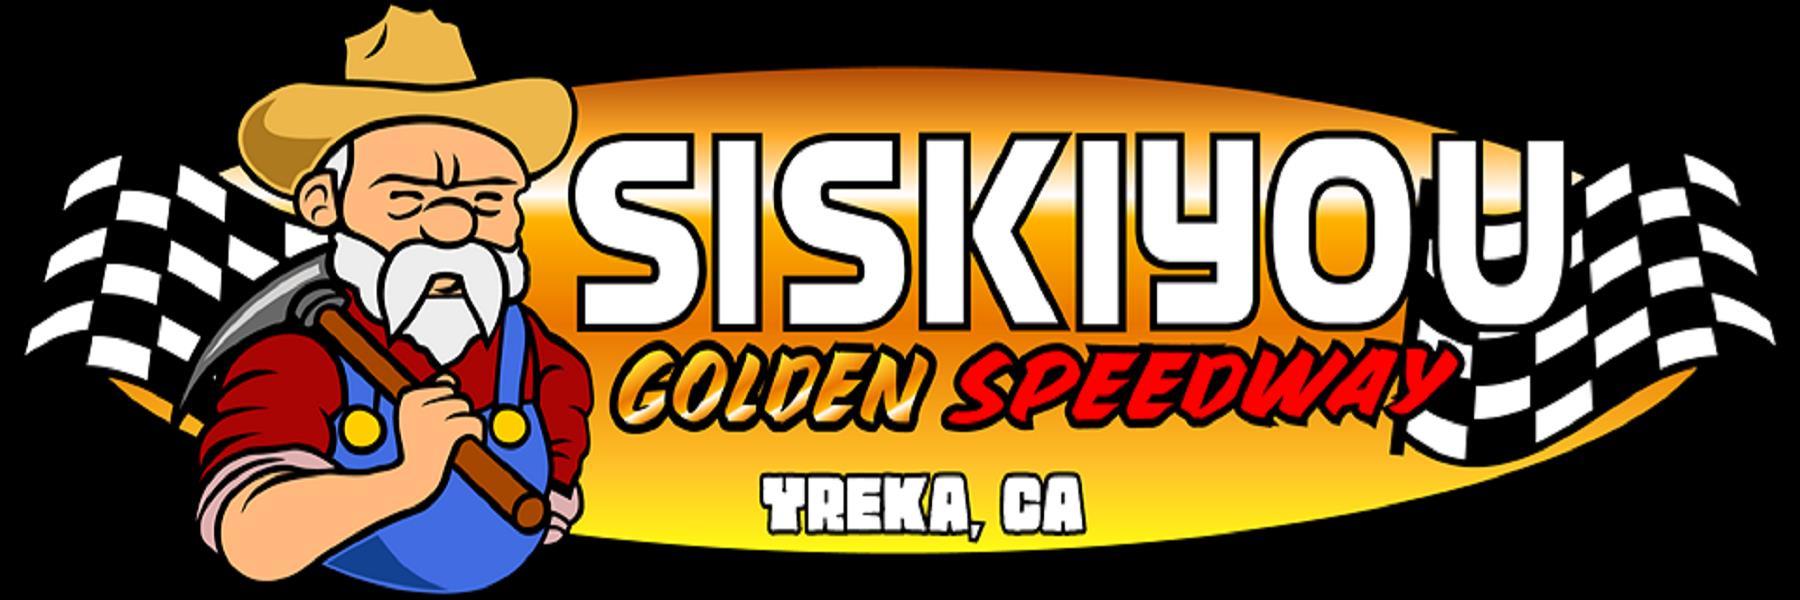 9/5/2021 - Siskiyou Golden Speedway